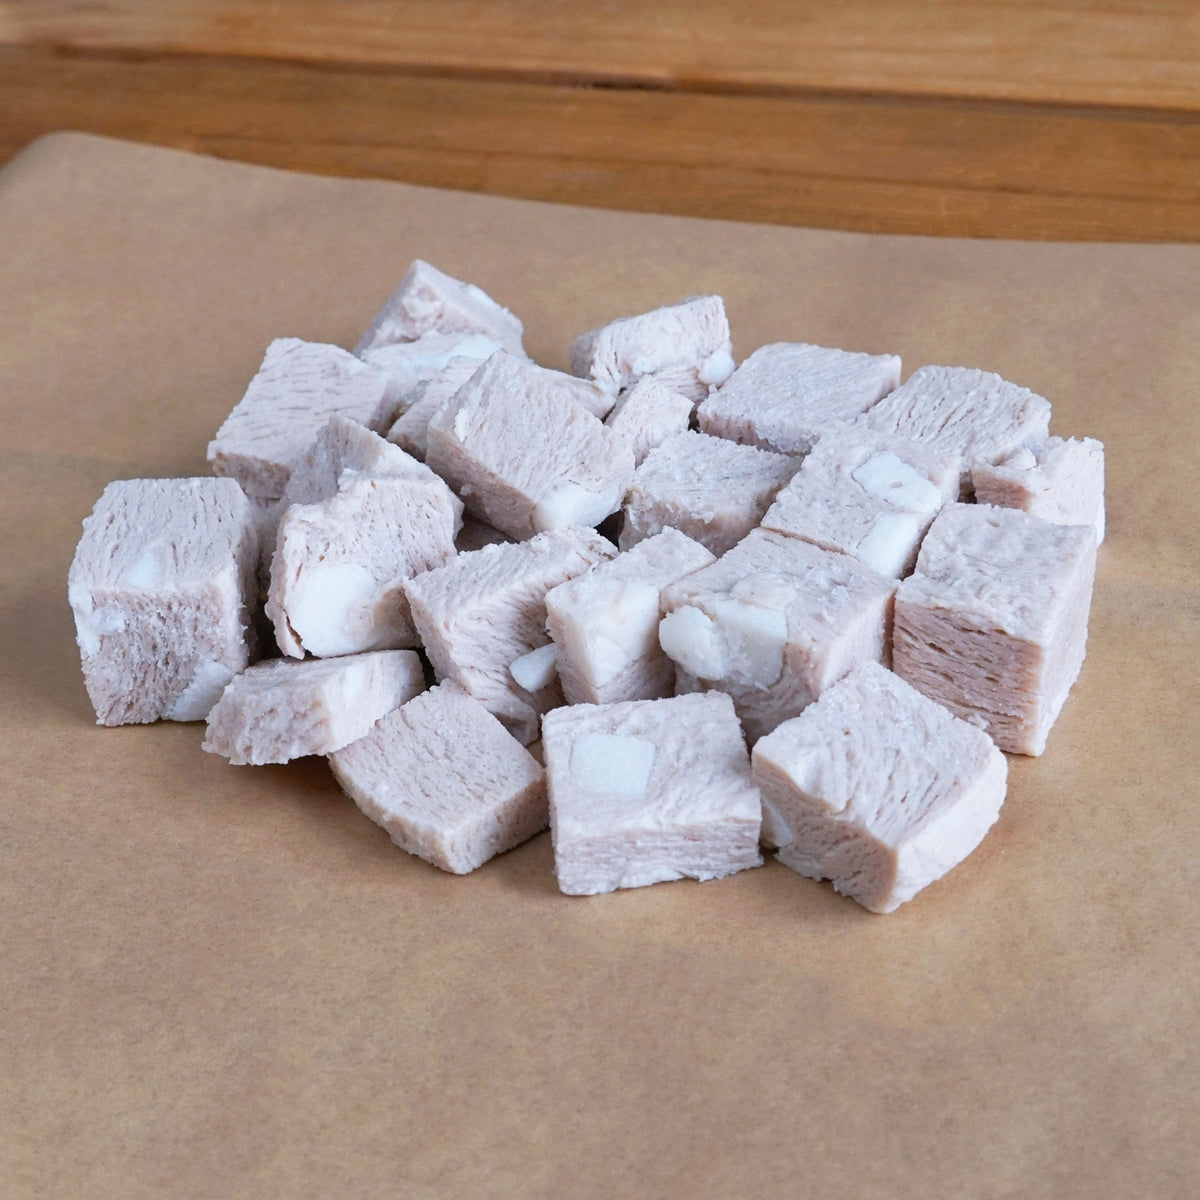 All-Natural Sugar-Free Free-Range Mortadella Cubes from the Netherlands (200g)